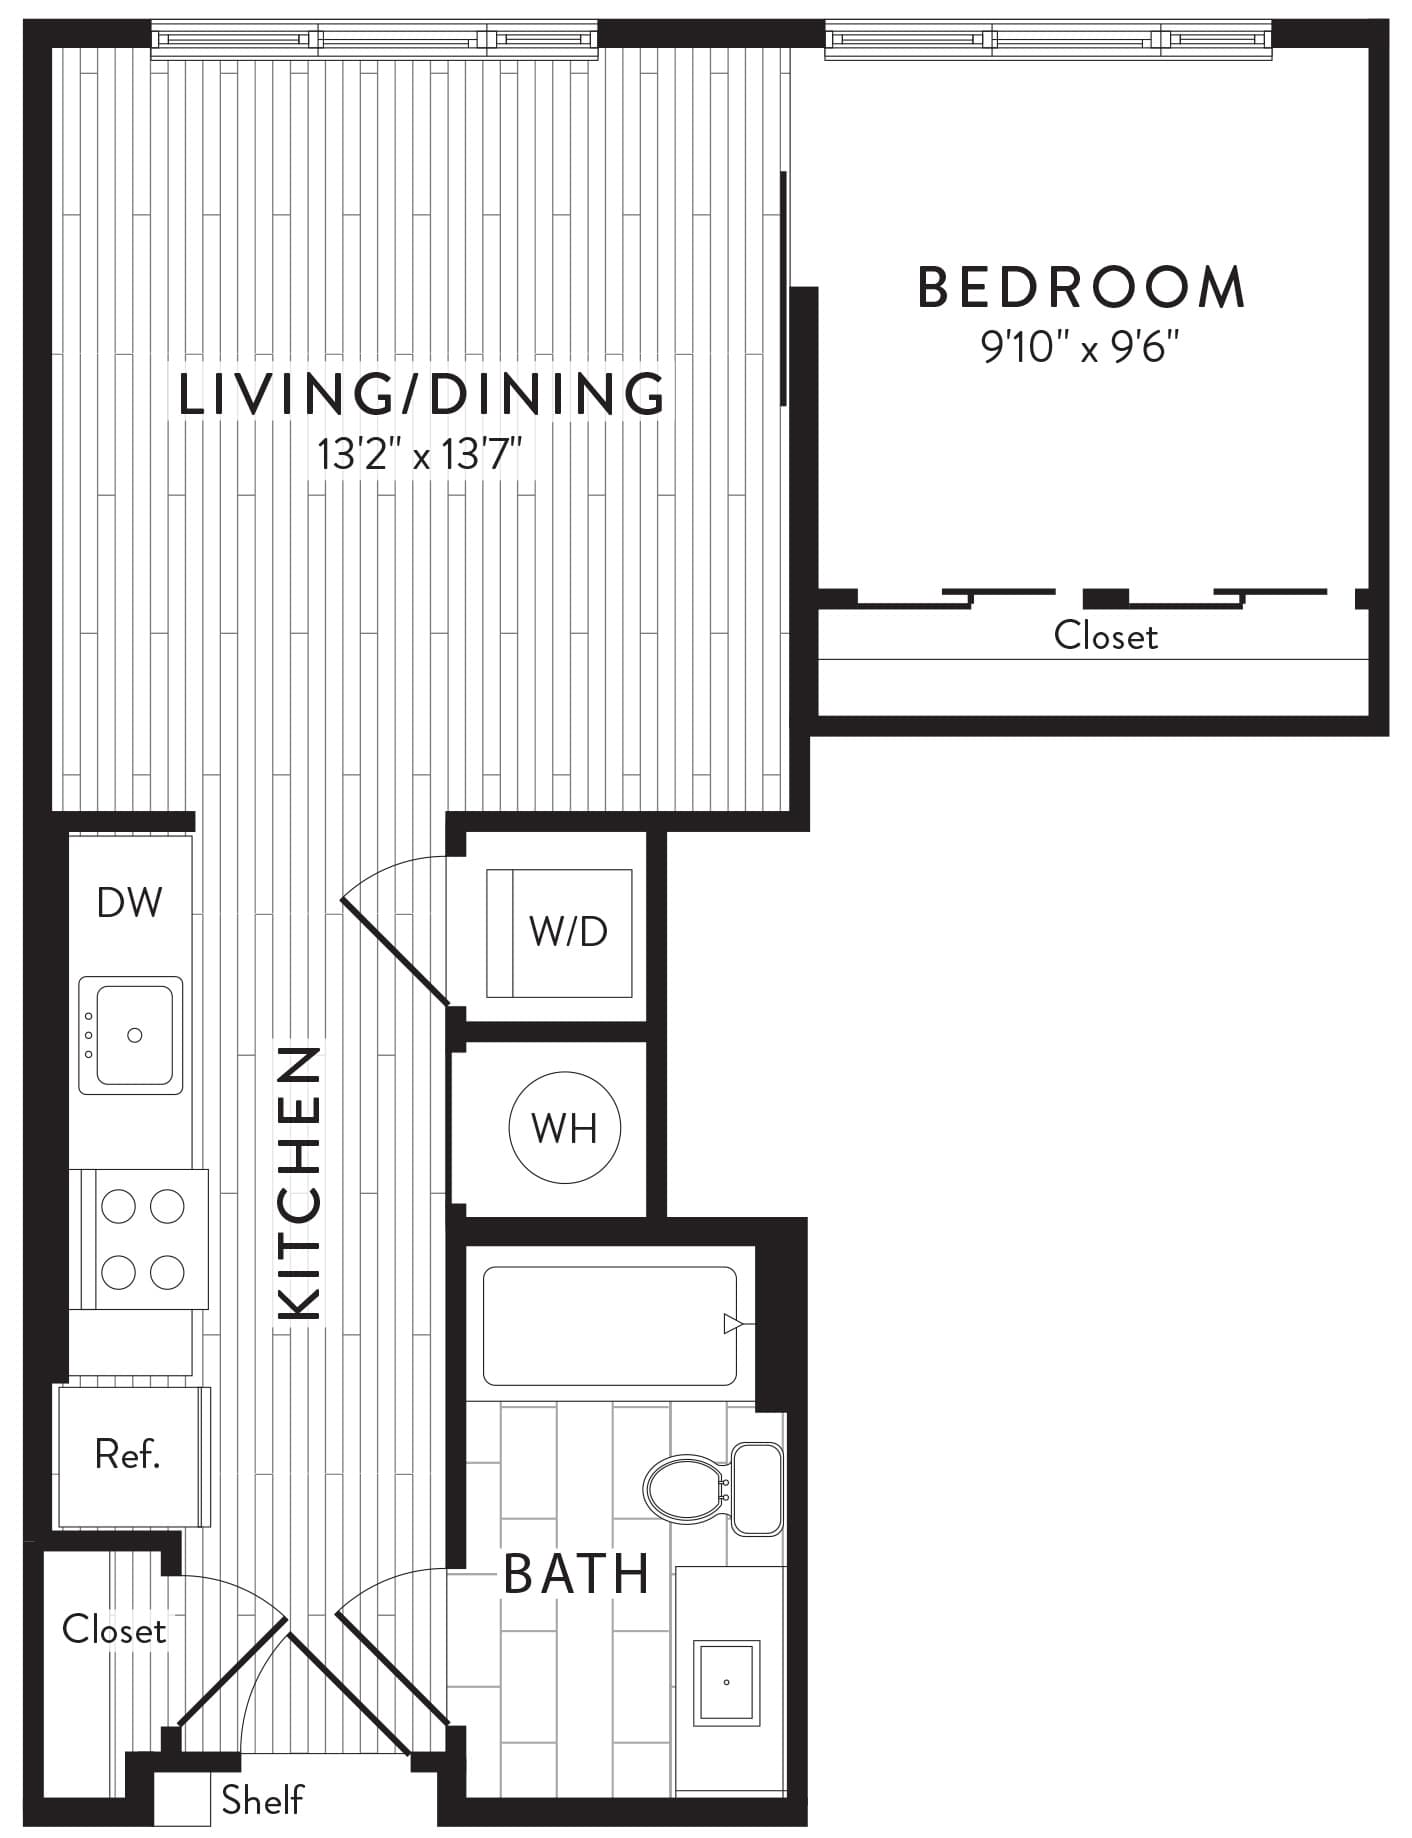 View Anthem House Apartment Floor Plans Studios, 1, 2, 3